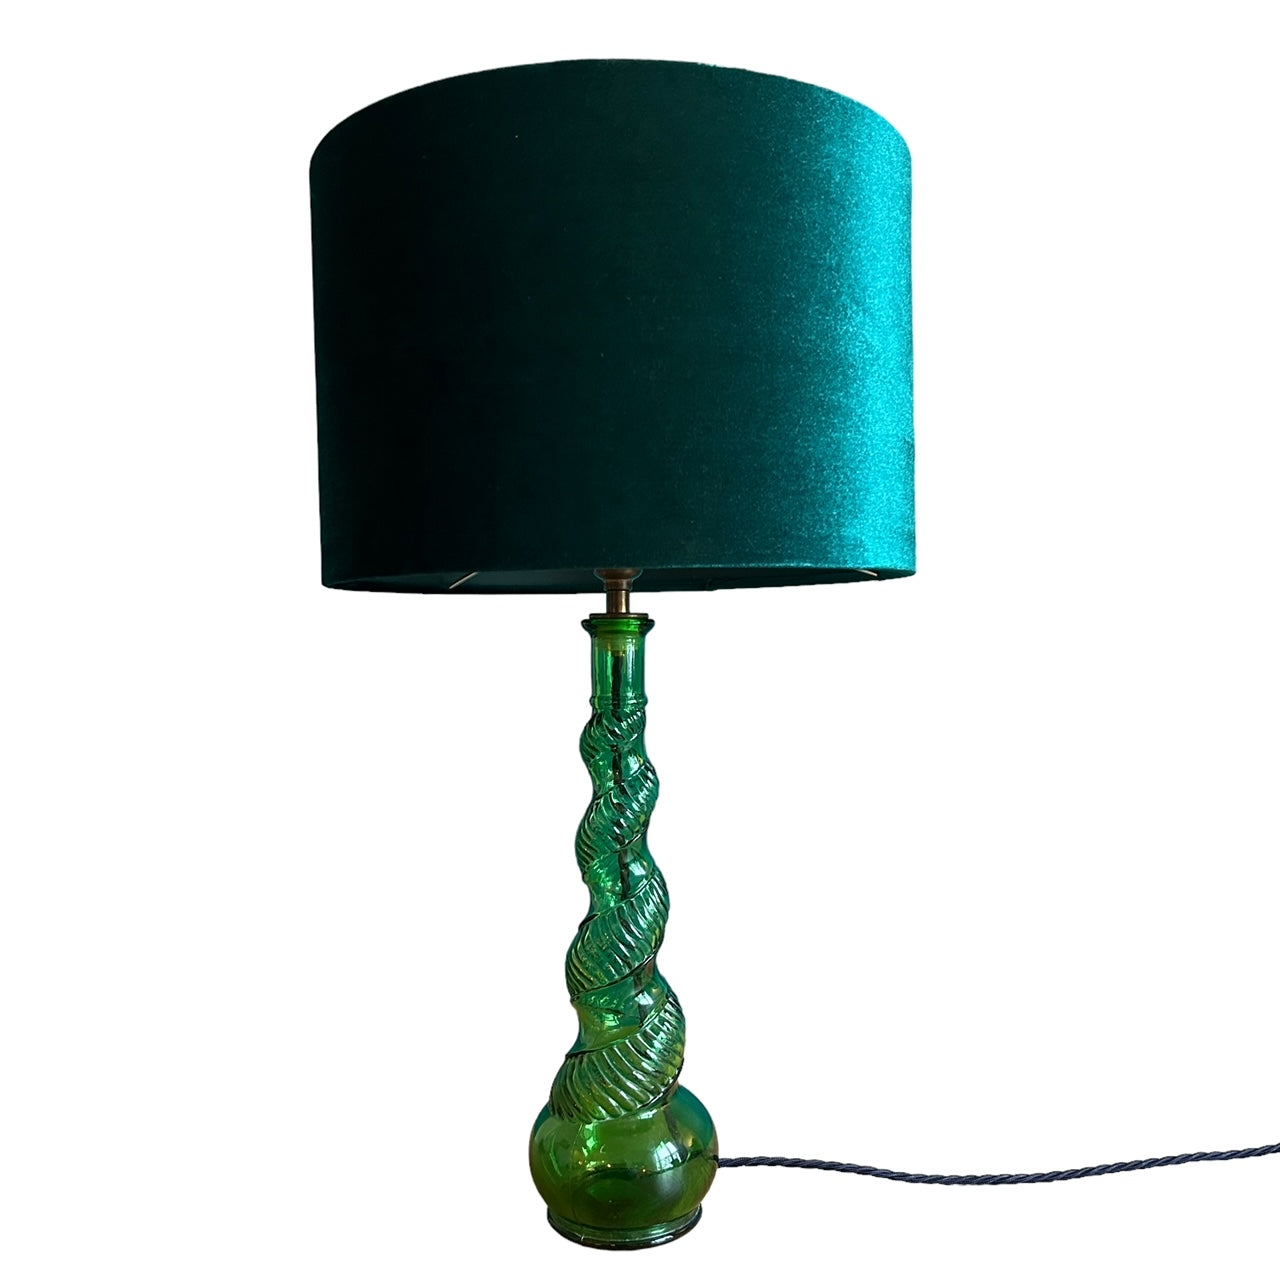 Glass twist lamp in green